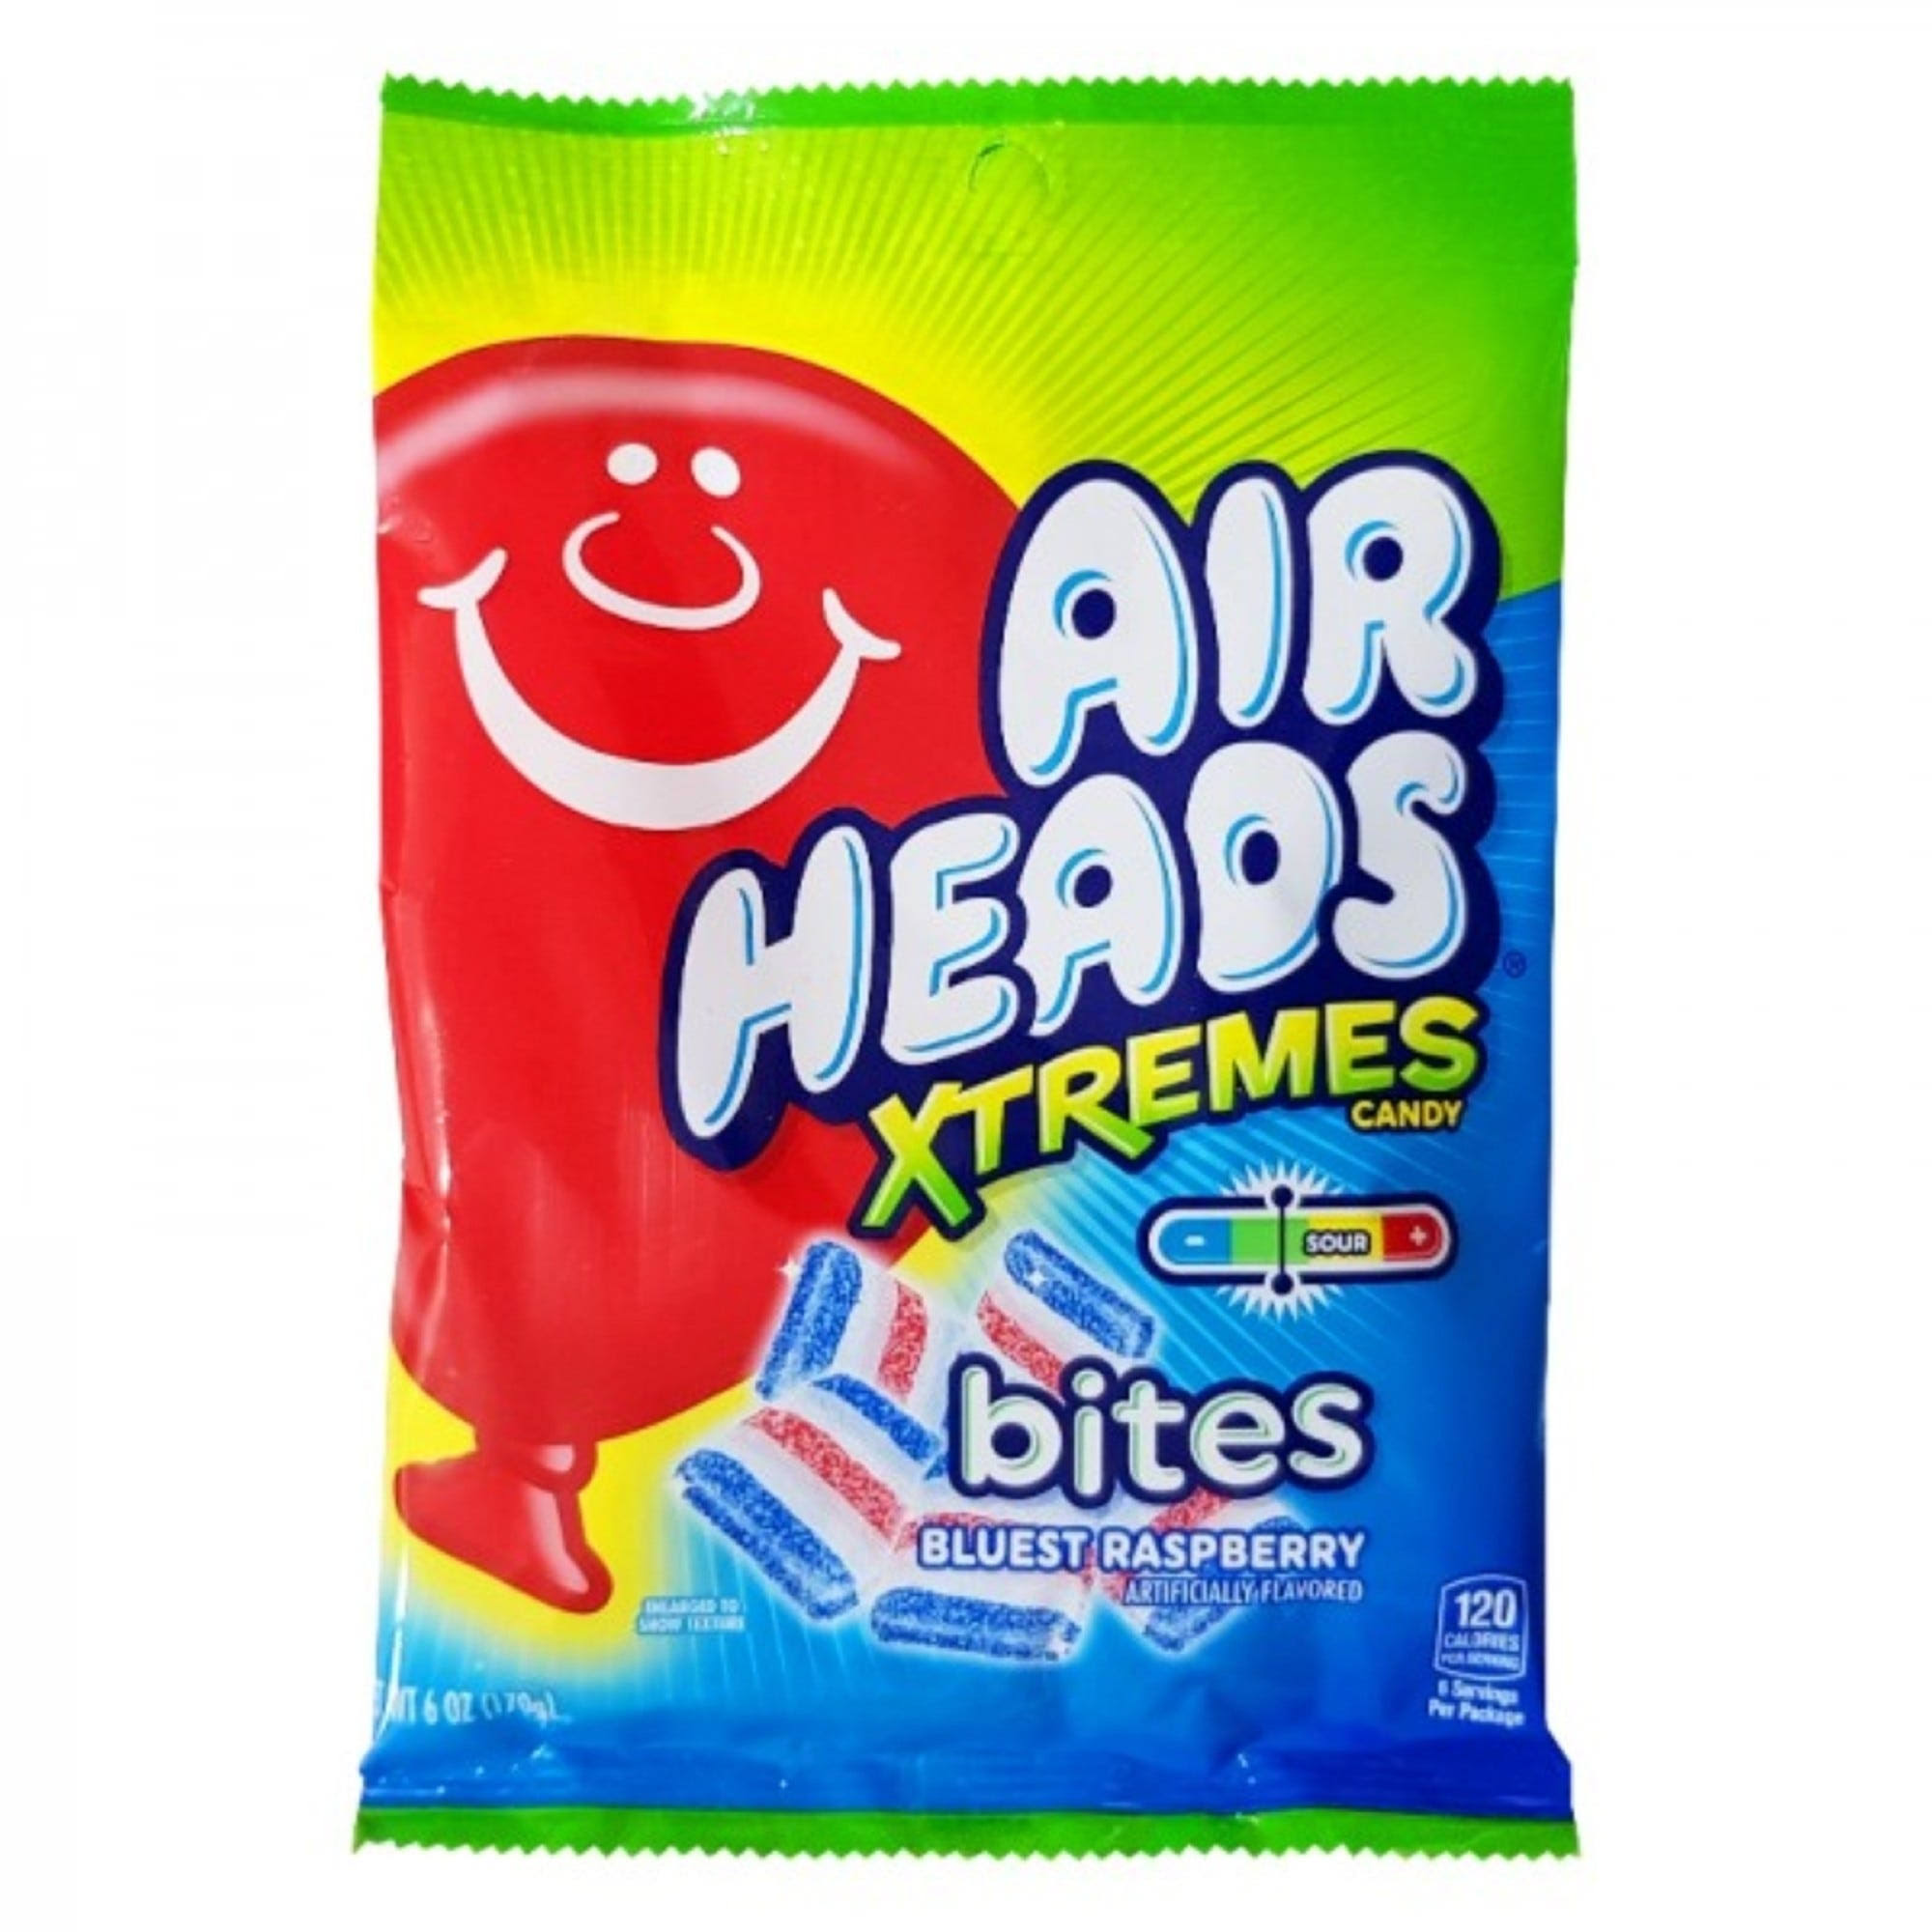 Airheads Xtremes Candy Bites, Bluest Raspberry - 6 oz